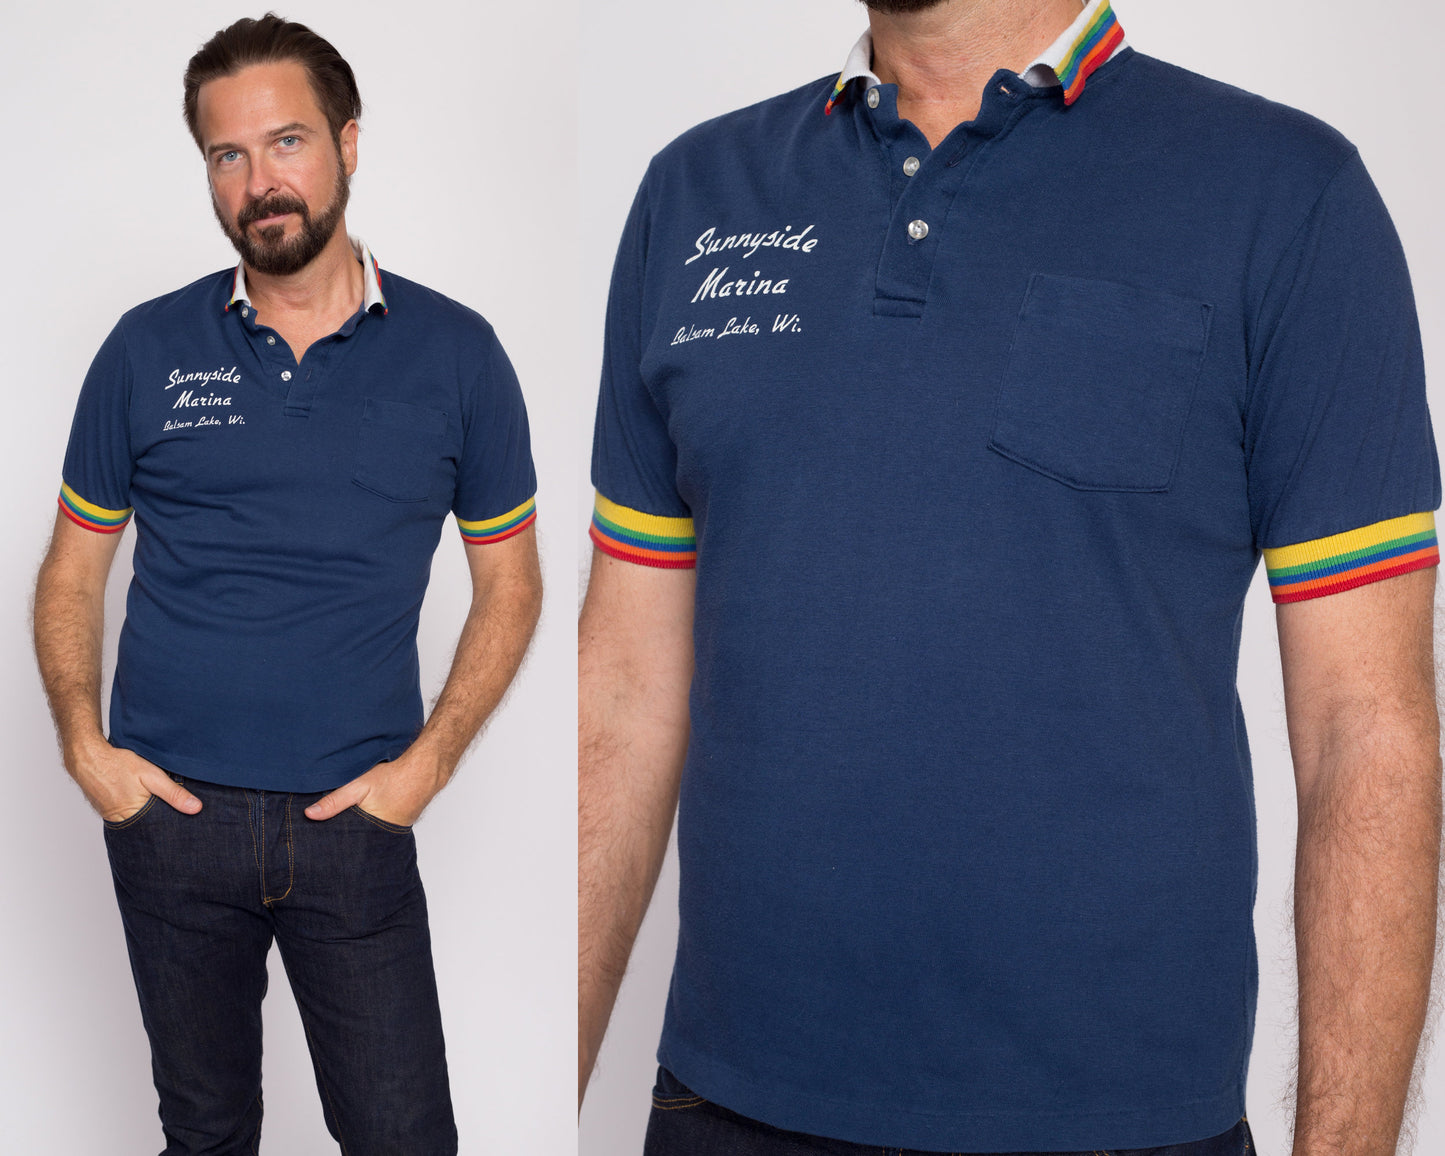 M| 80s Rainbow Striped Polo Shirt - Men's Medium | Vintage Balsam Lake Staff Uniform Short Sleeve Collared Shirt